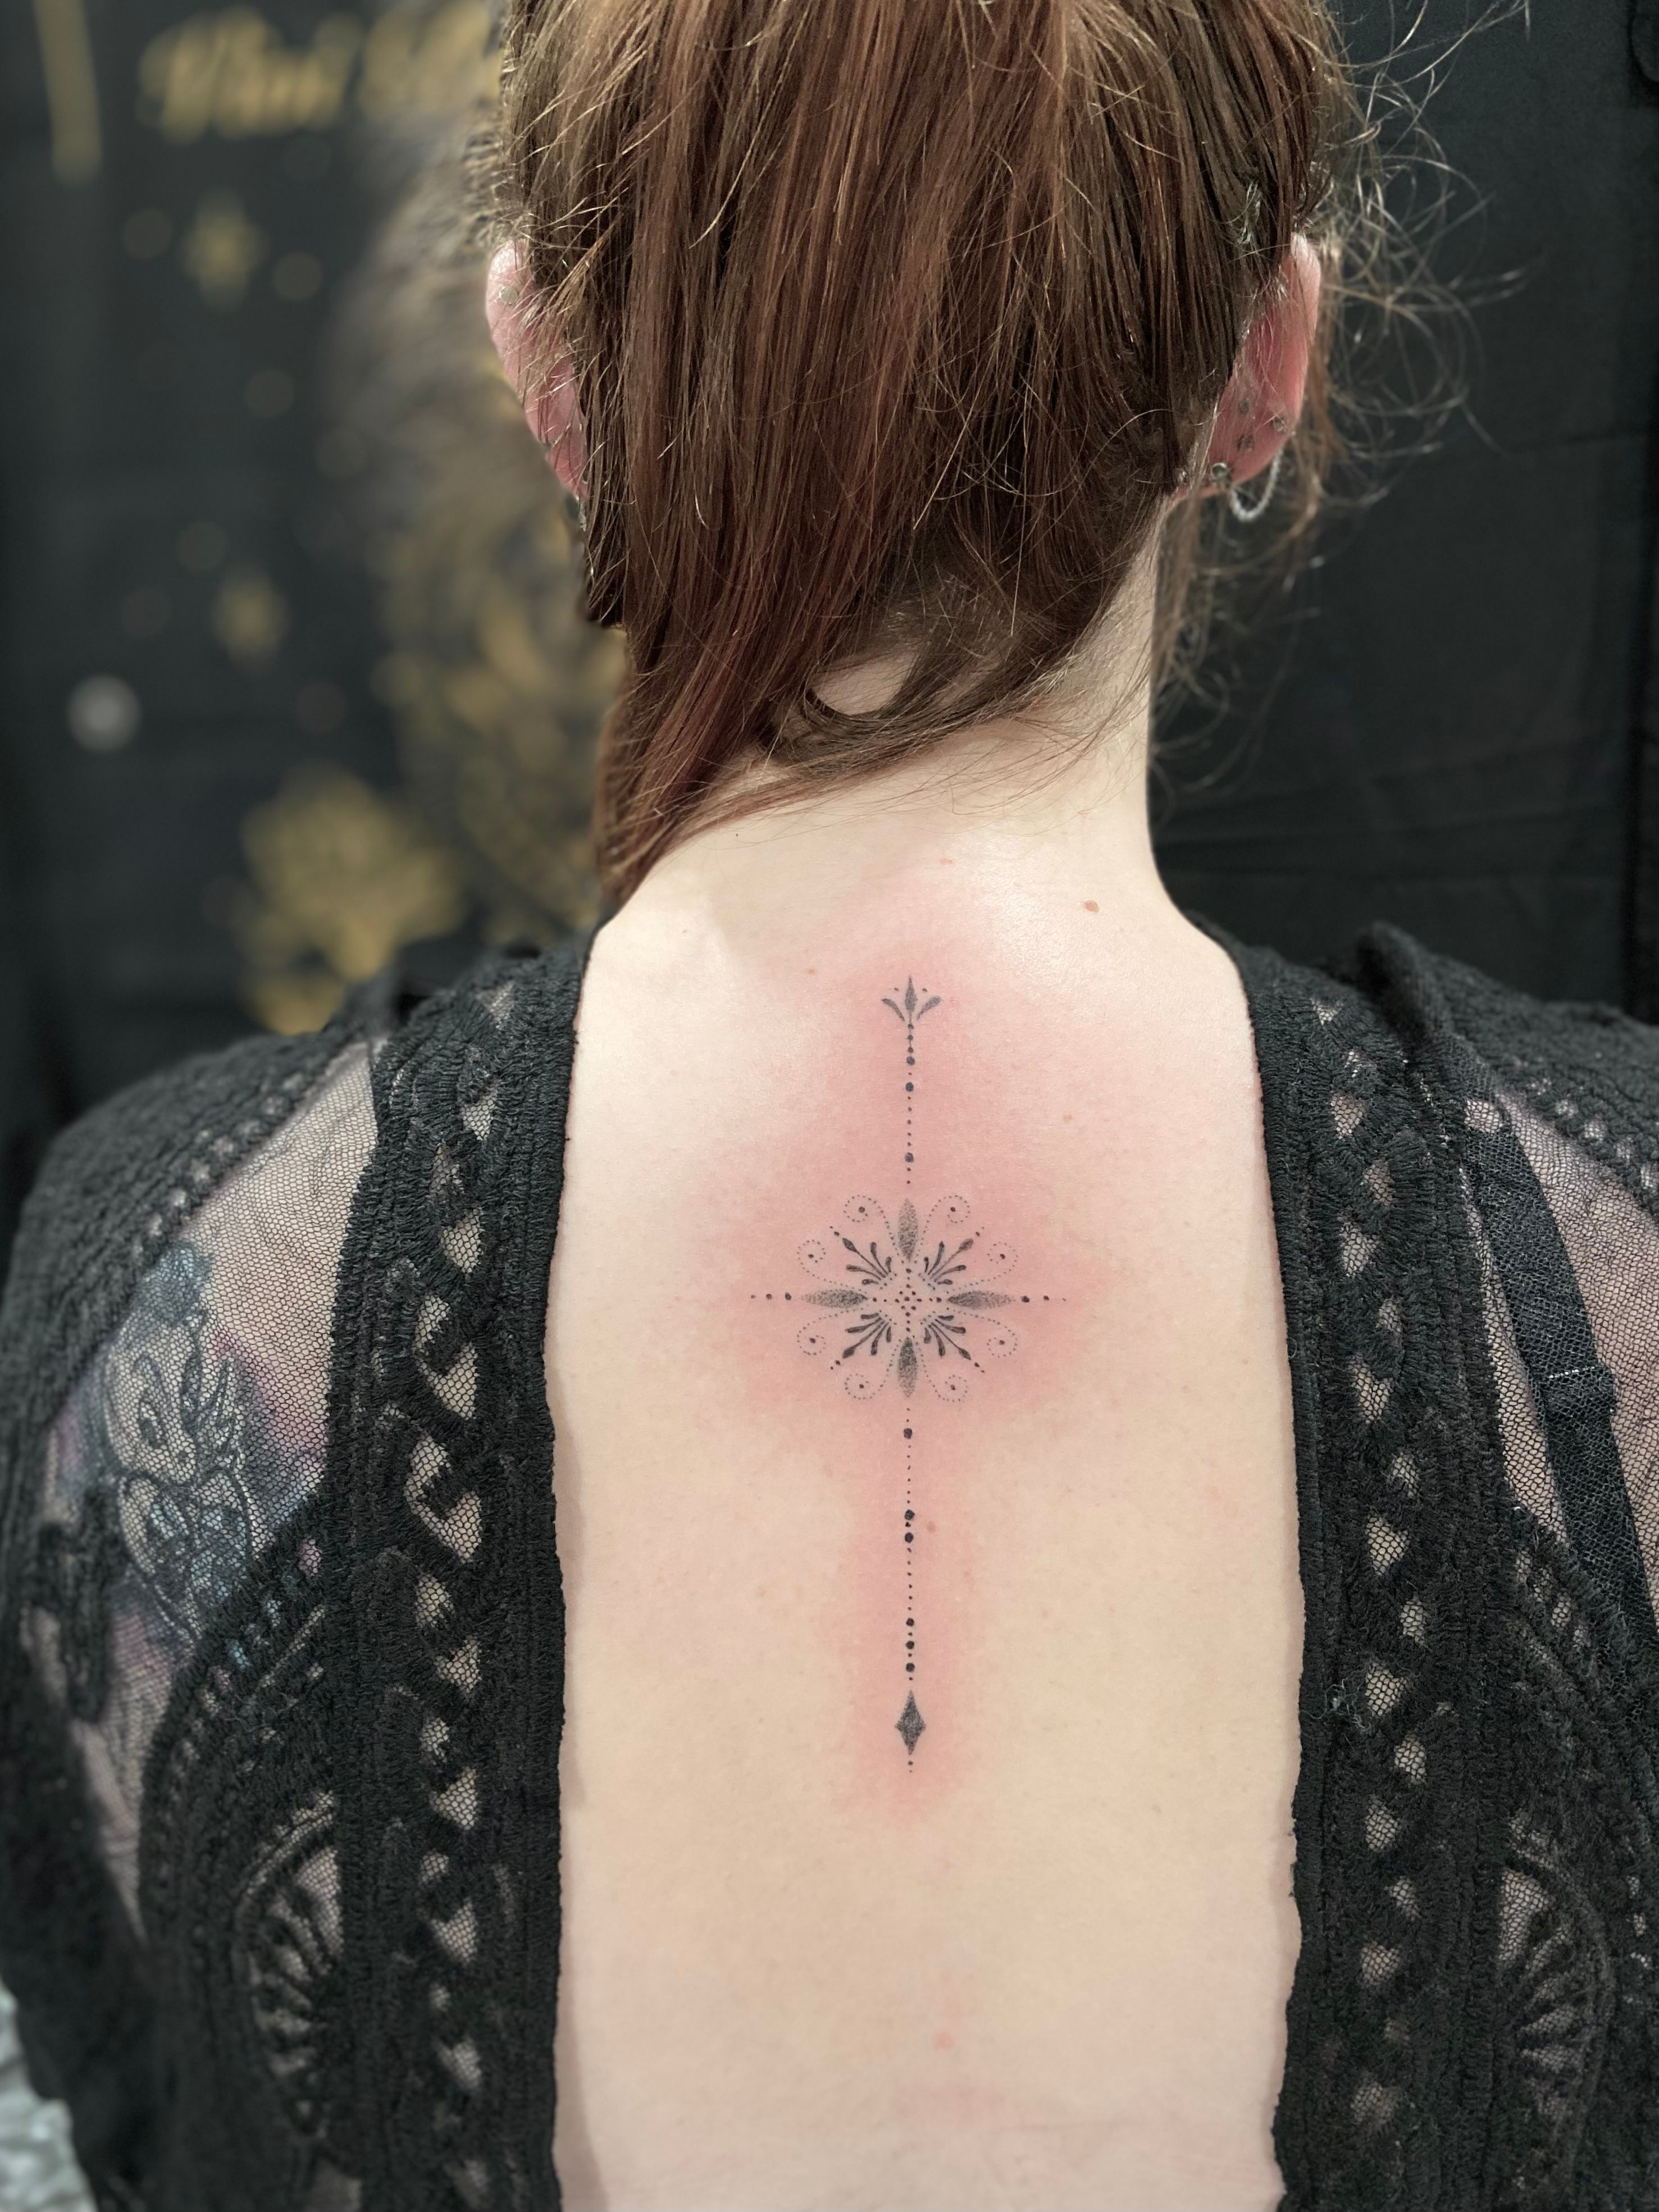 Delicate and airy tattoos for girls from Karolina Szymańska | iNKPPL